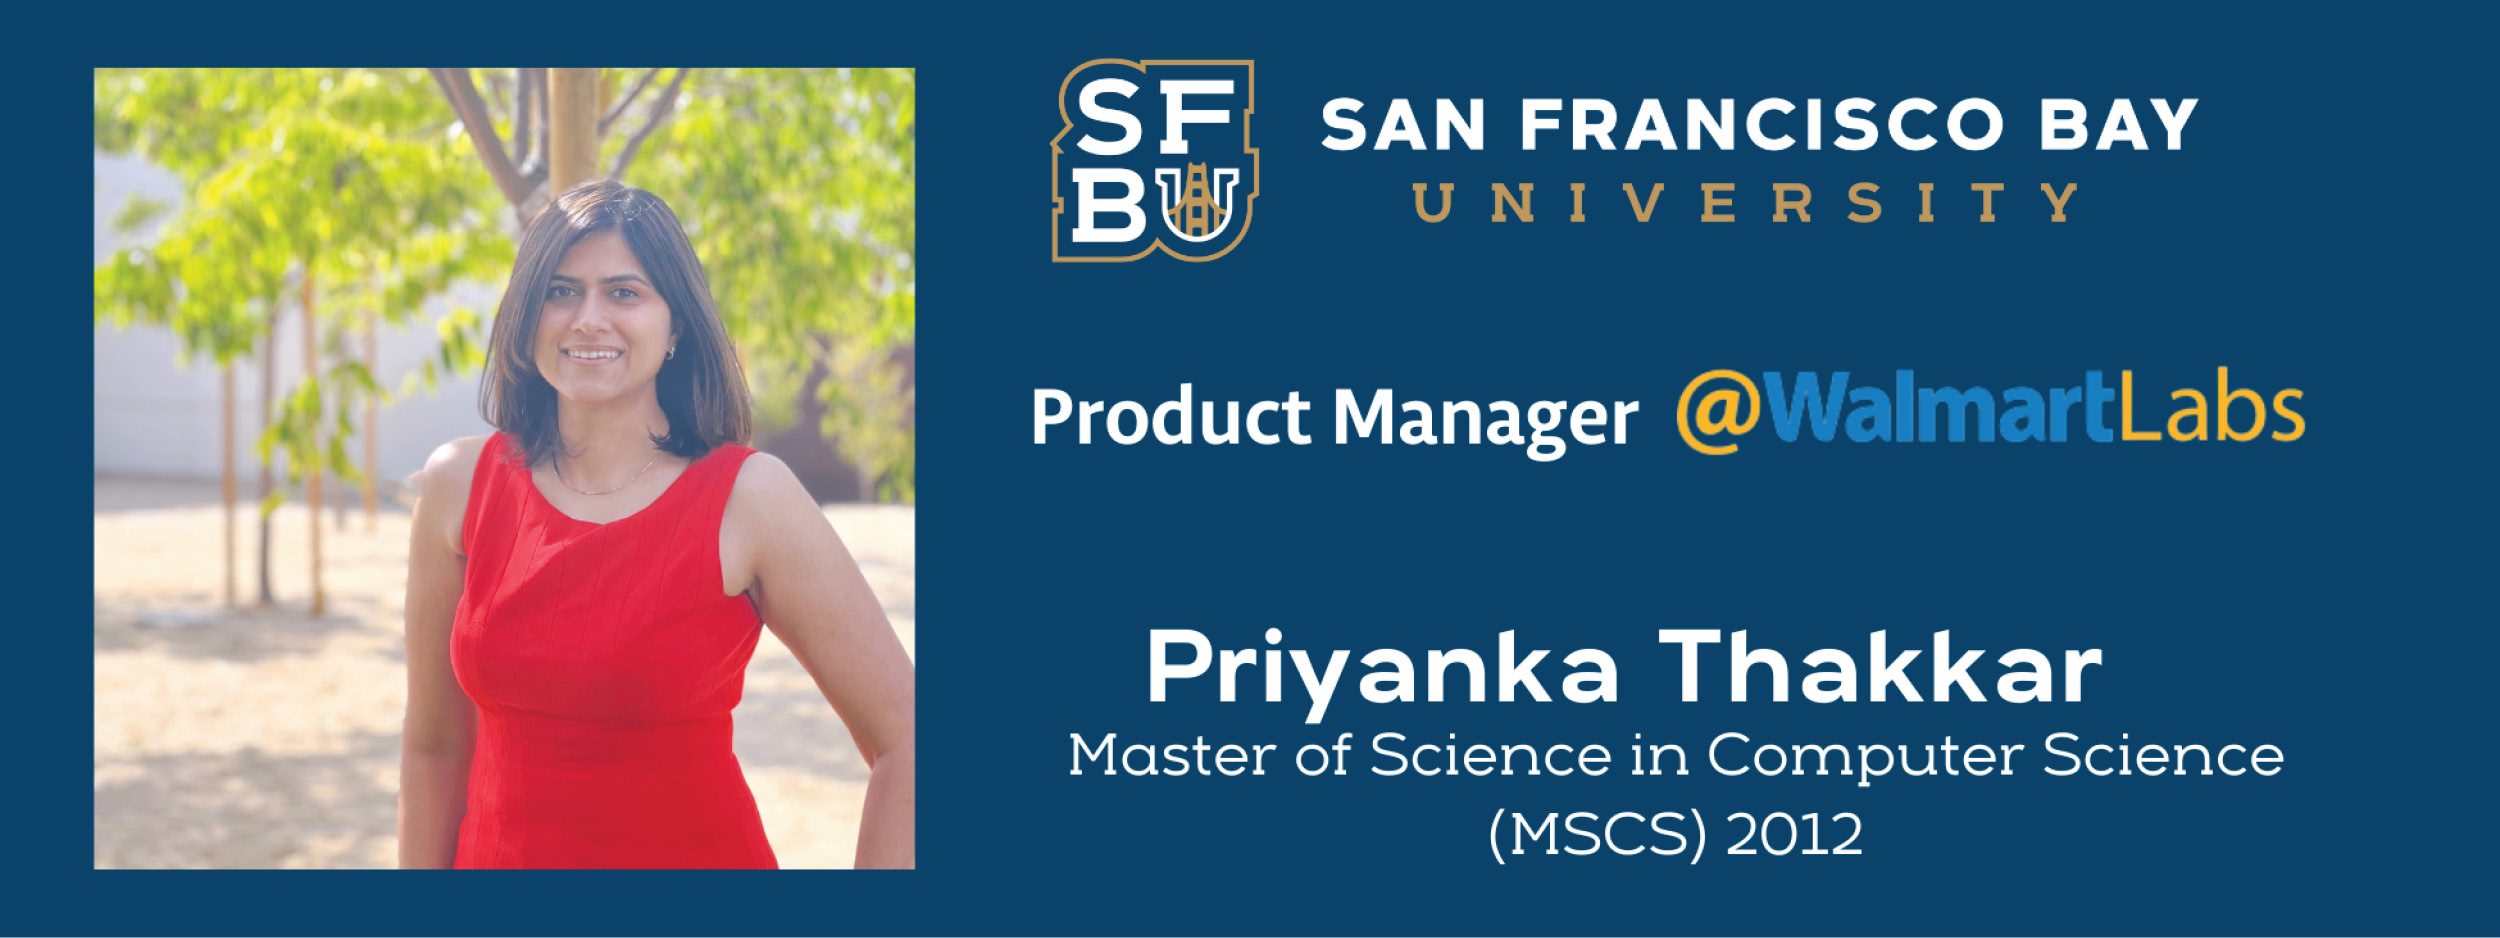 Priyanka Thakkar Profile Picture with Employment Information 